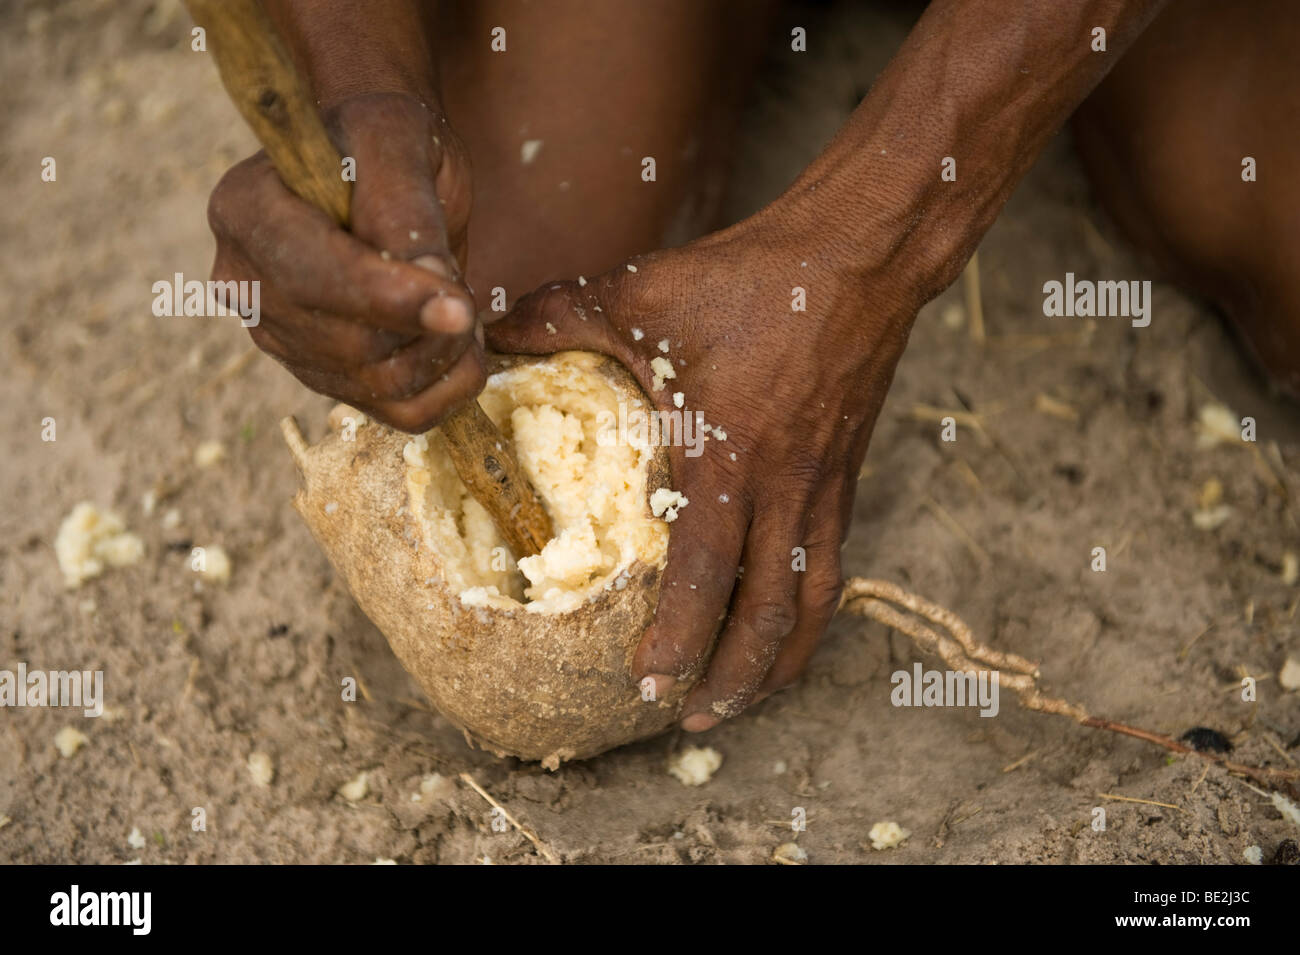 Naro bushman (San) crushing a milkplant root (Raphionacme burkei) for water, Central Kalahari, Botswana Stock Photo